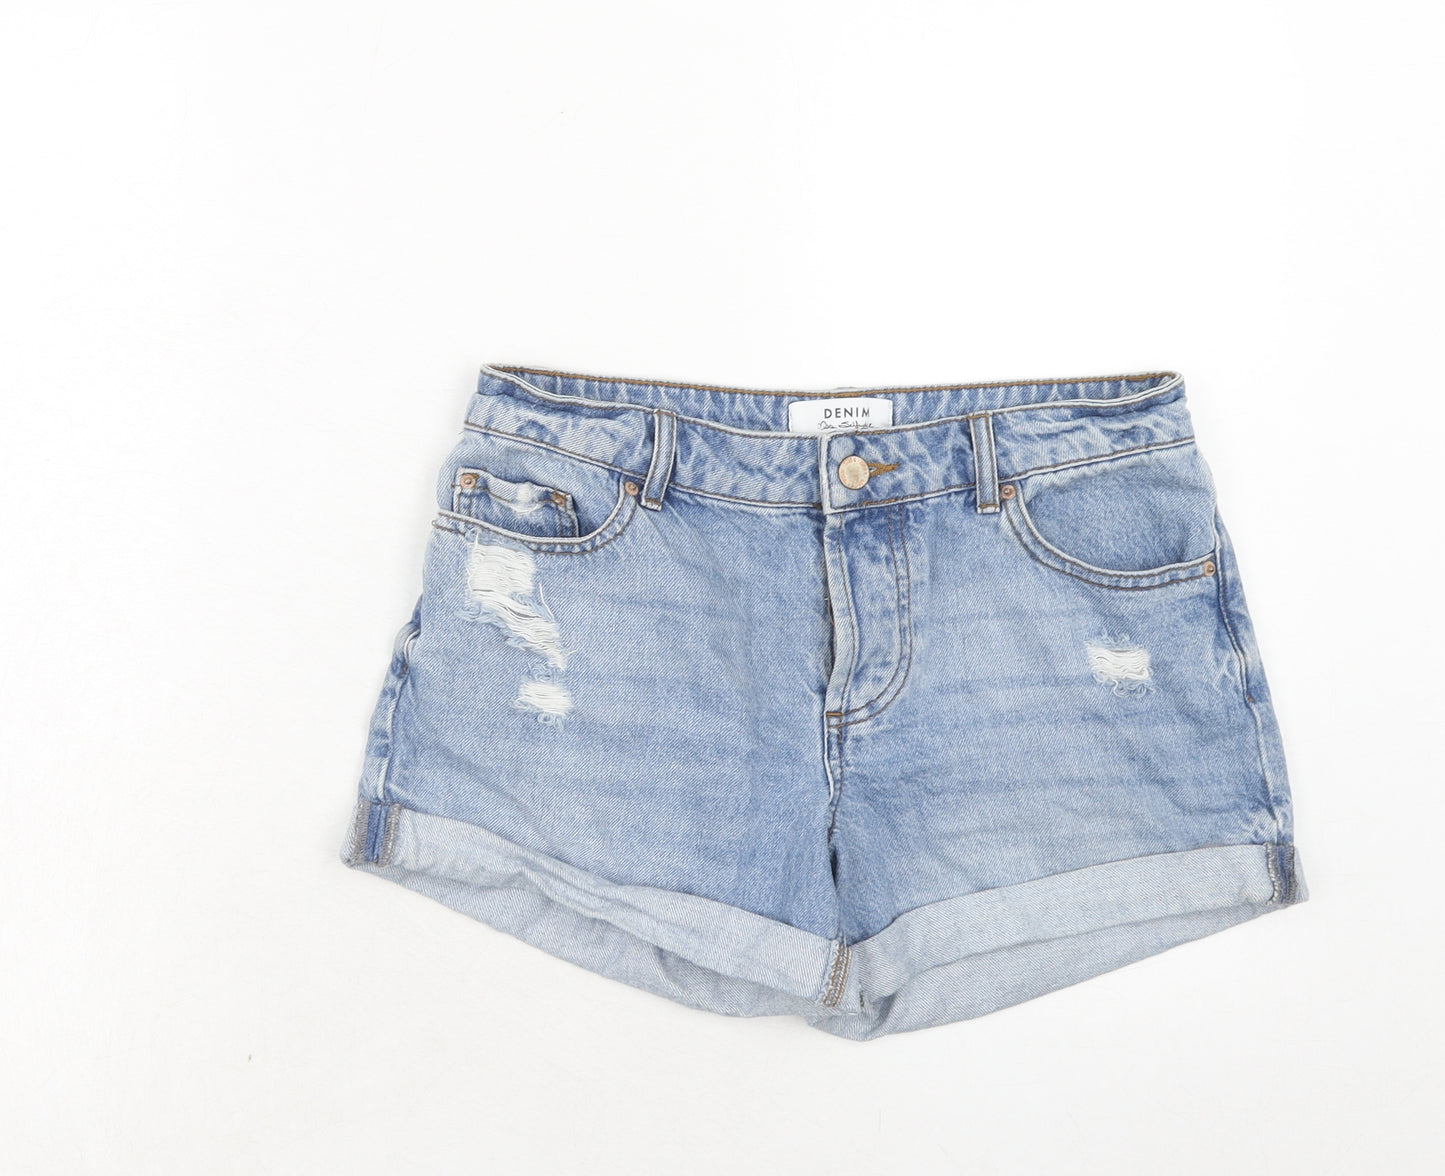 Miss Selfridge Womens Blue Cotton Hot Pants Shorts Size 8 Regular Zip - Distressed